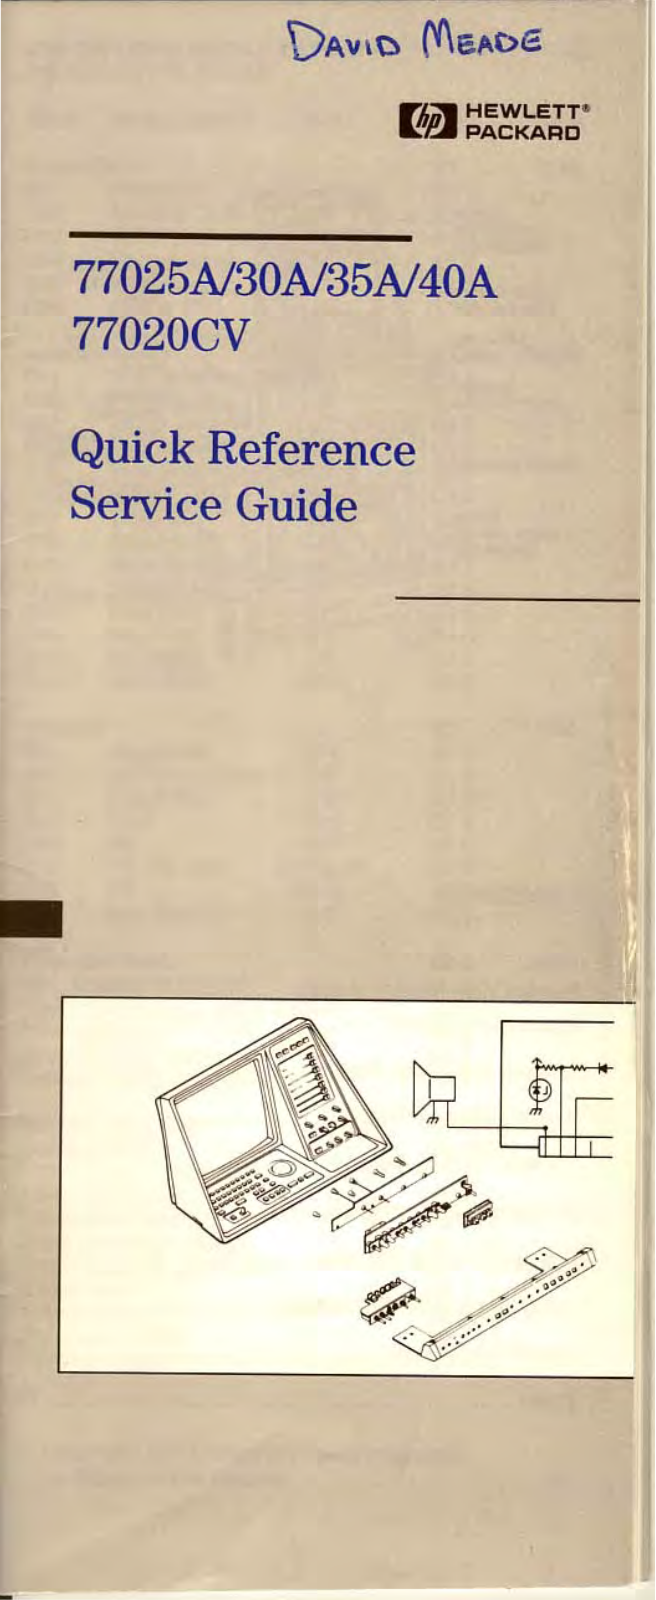 HP 77020CV, 77040A, 77035A, 77030A, 77025A Service Manual